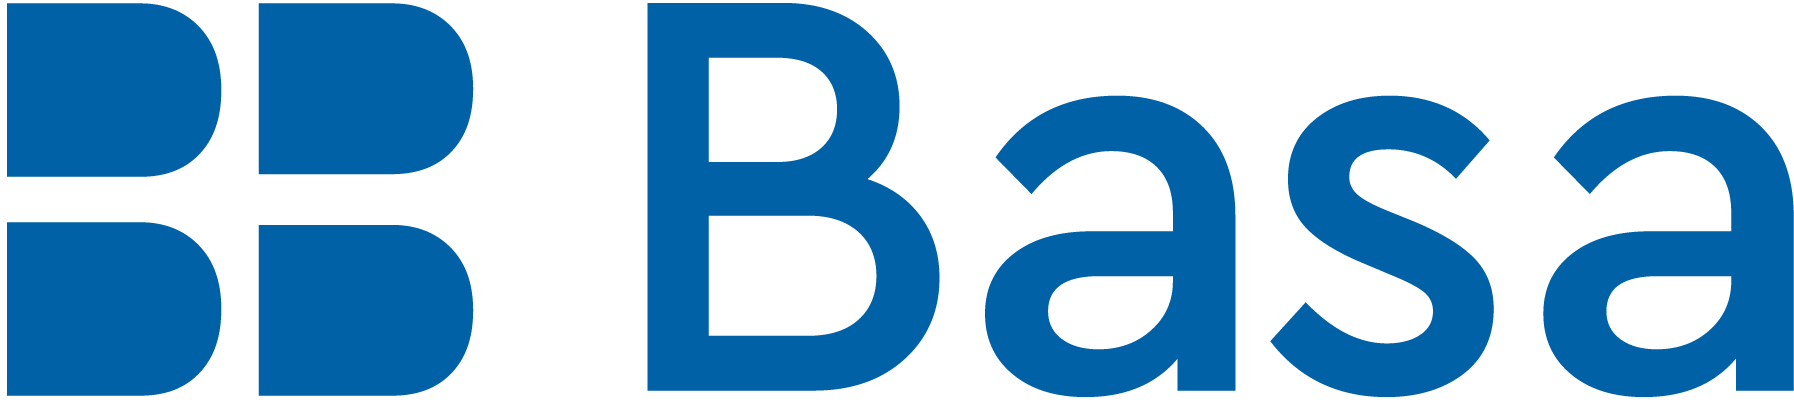 banco basa logo1